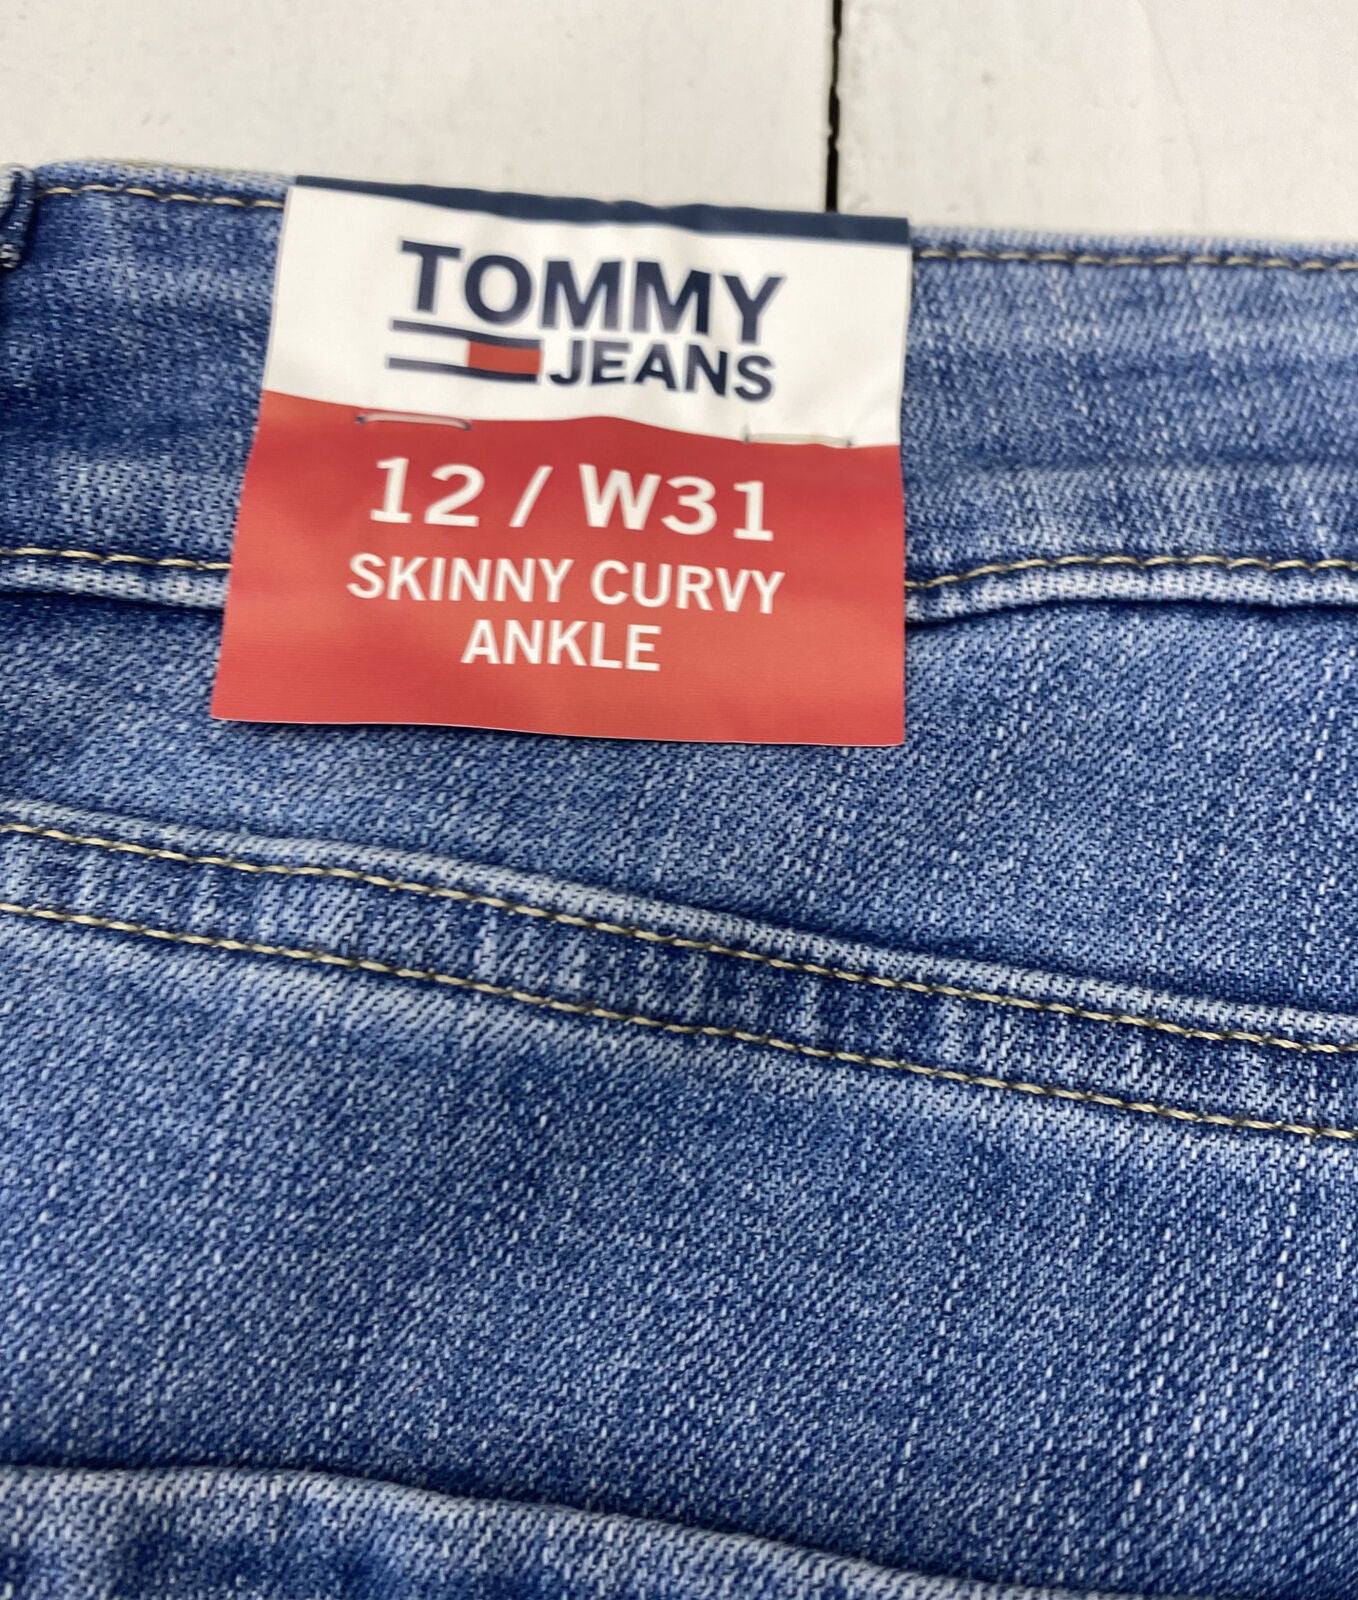 Womens Curvy Jean Size New TOBKOFZC 12/31 Ankle Skinny - Tommy beyond exchange Hilfiger